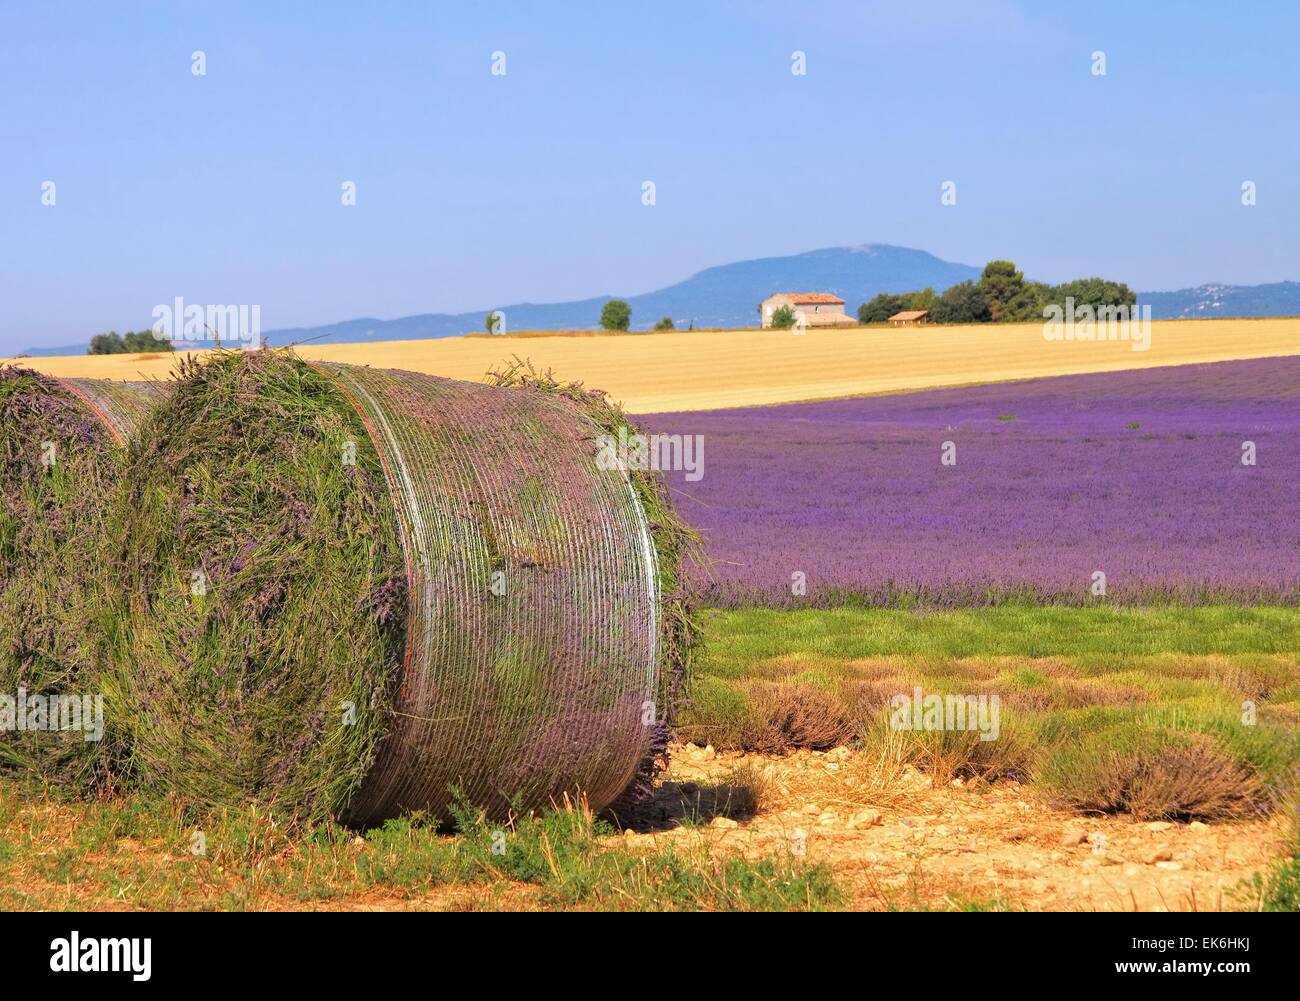 Ernte Lavendelfeld - lavanda cosecha de campo 10 Foto de stock